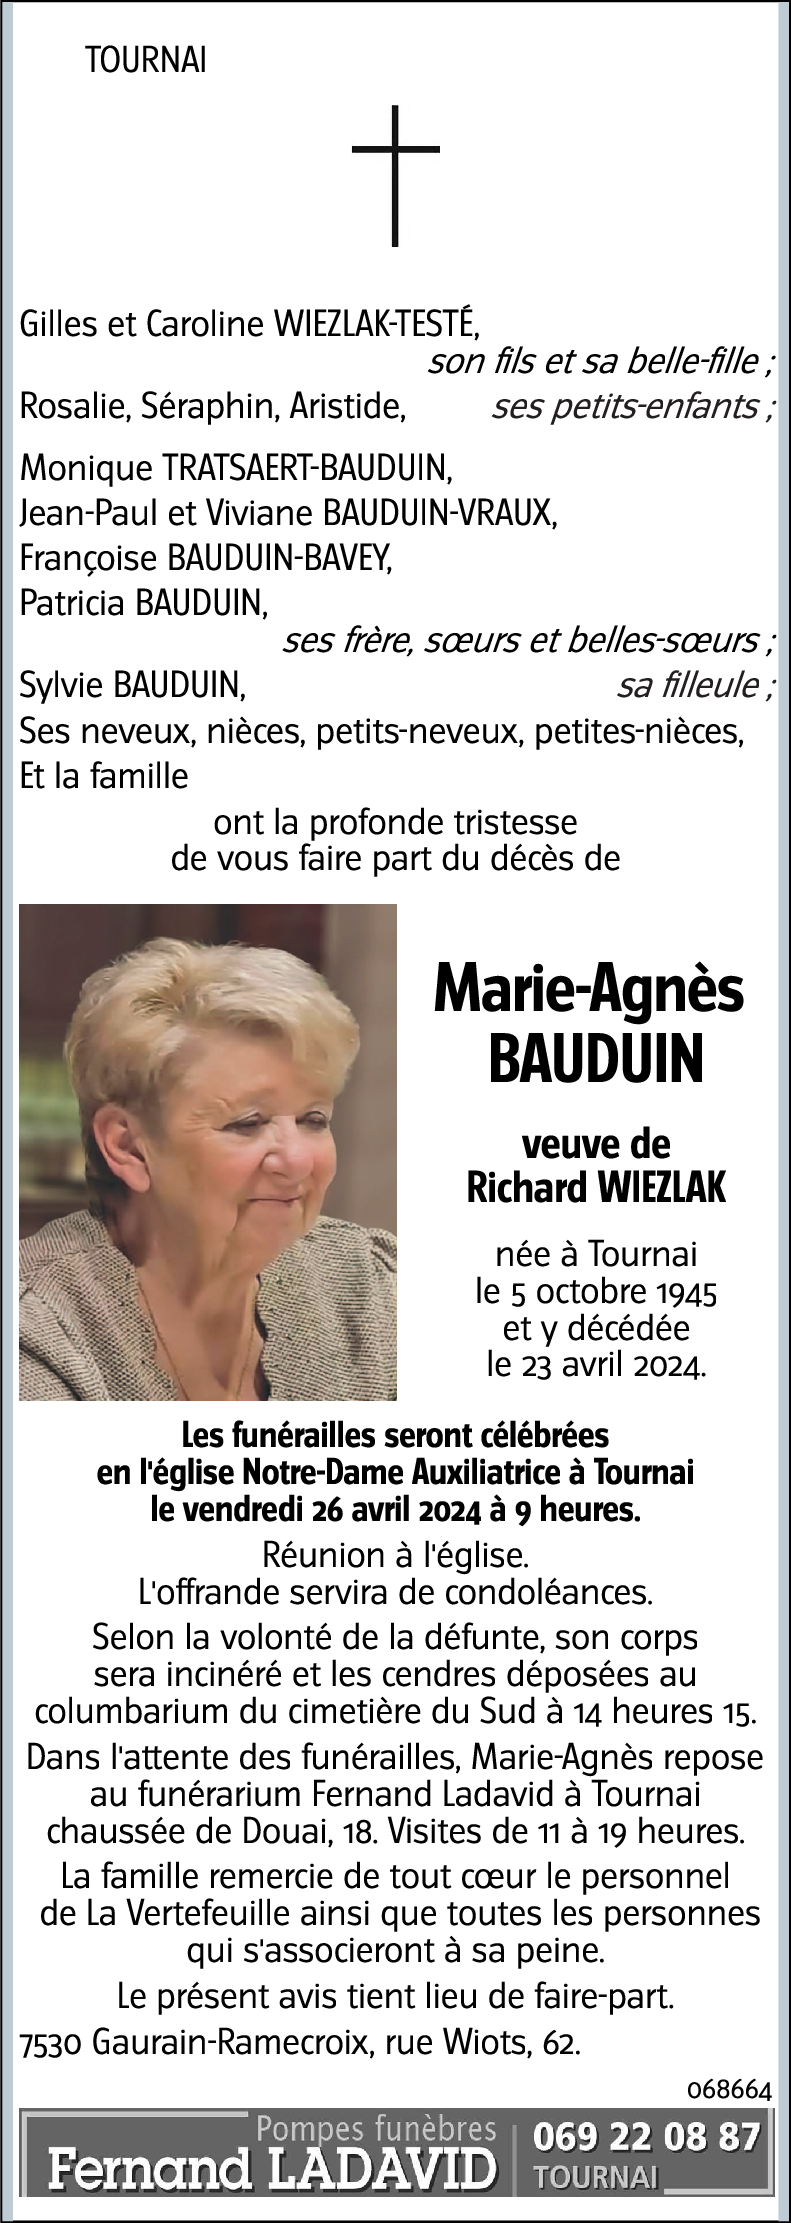 Marie-Agnès BAUDUIN